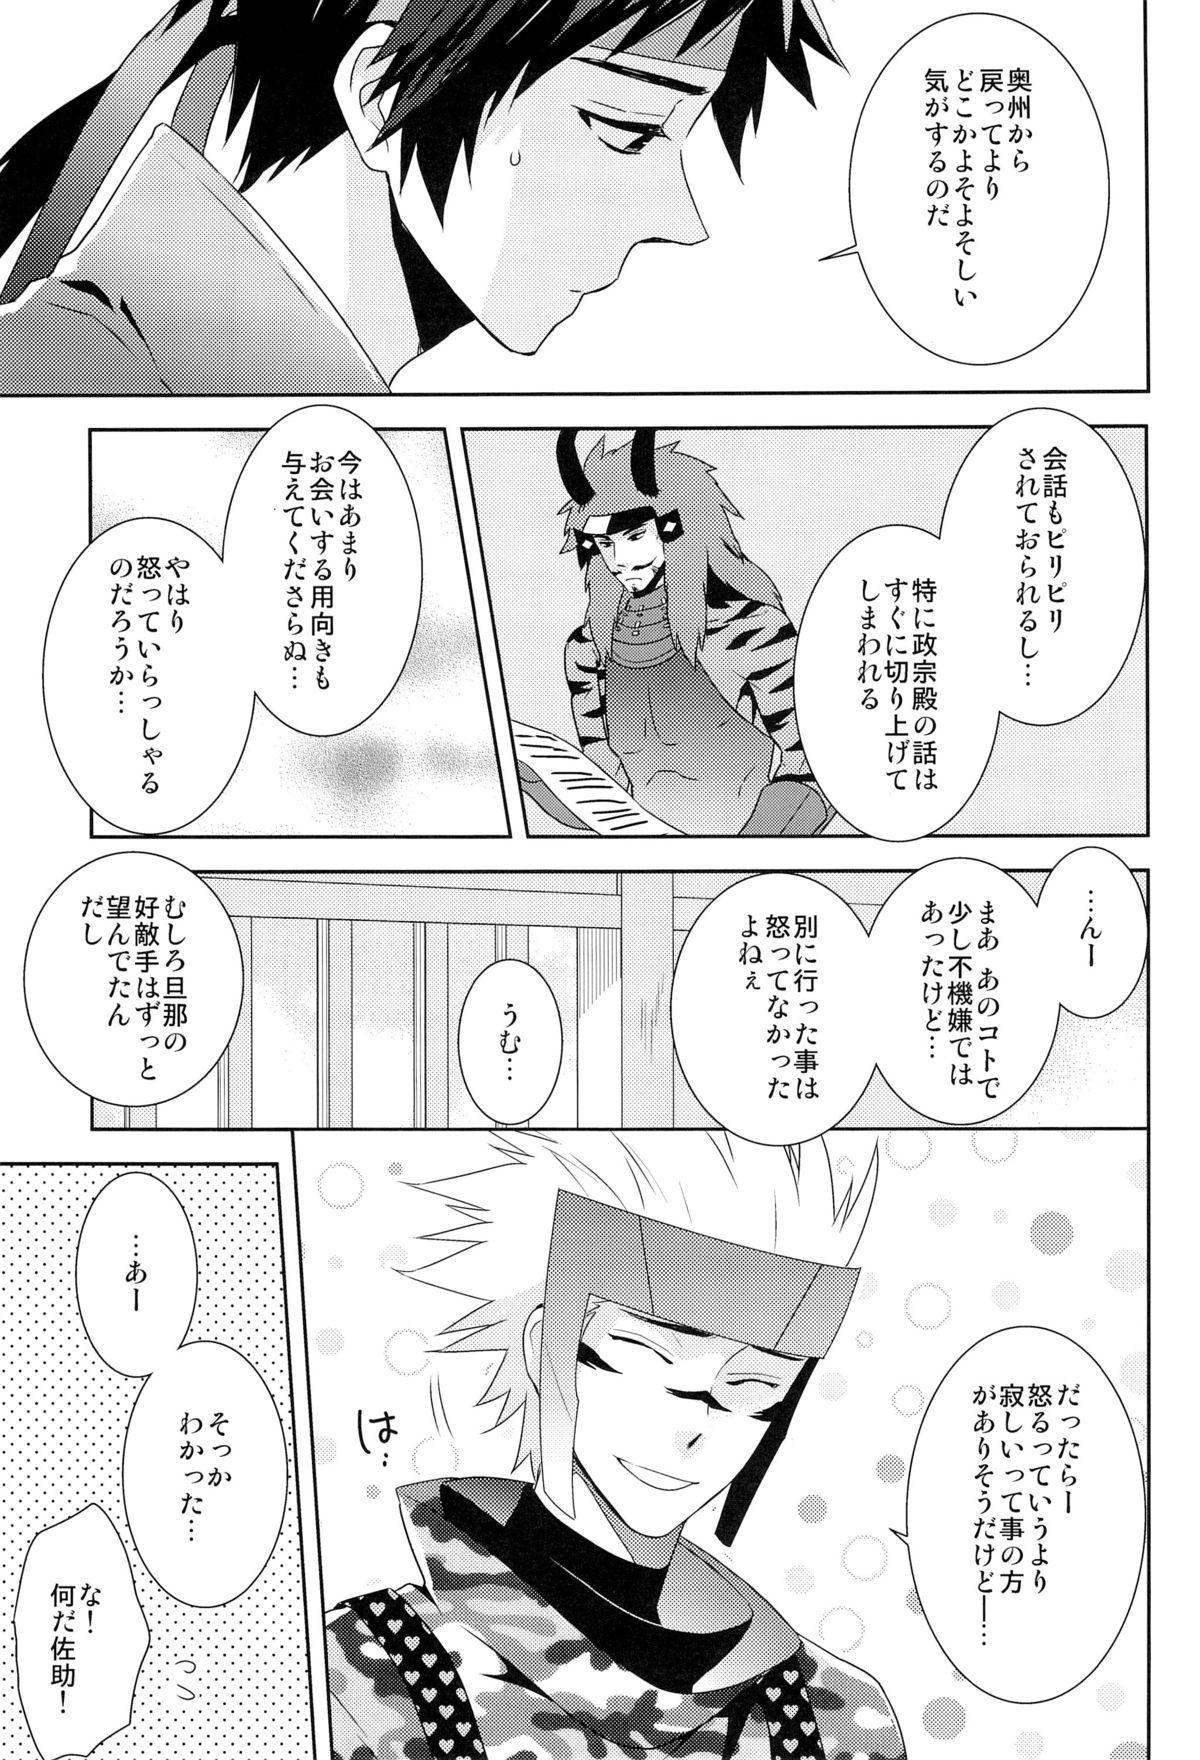 Soles envy - Sengoku basara Stripper - Page 7